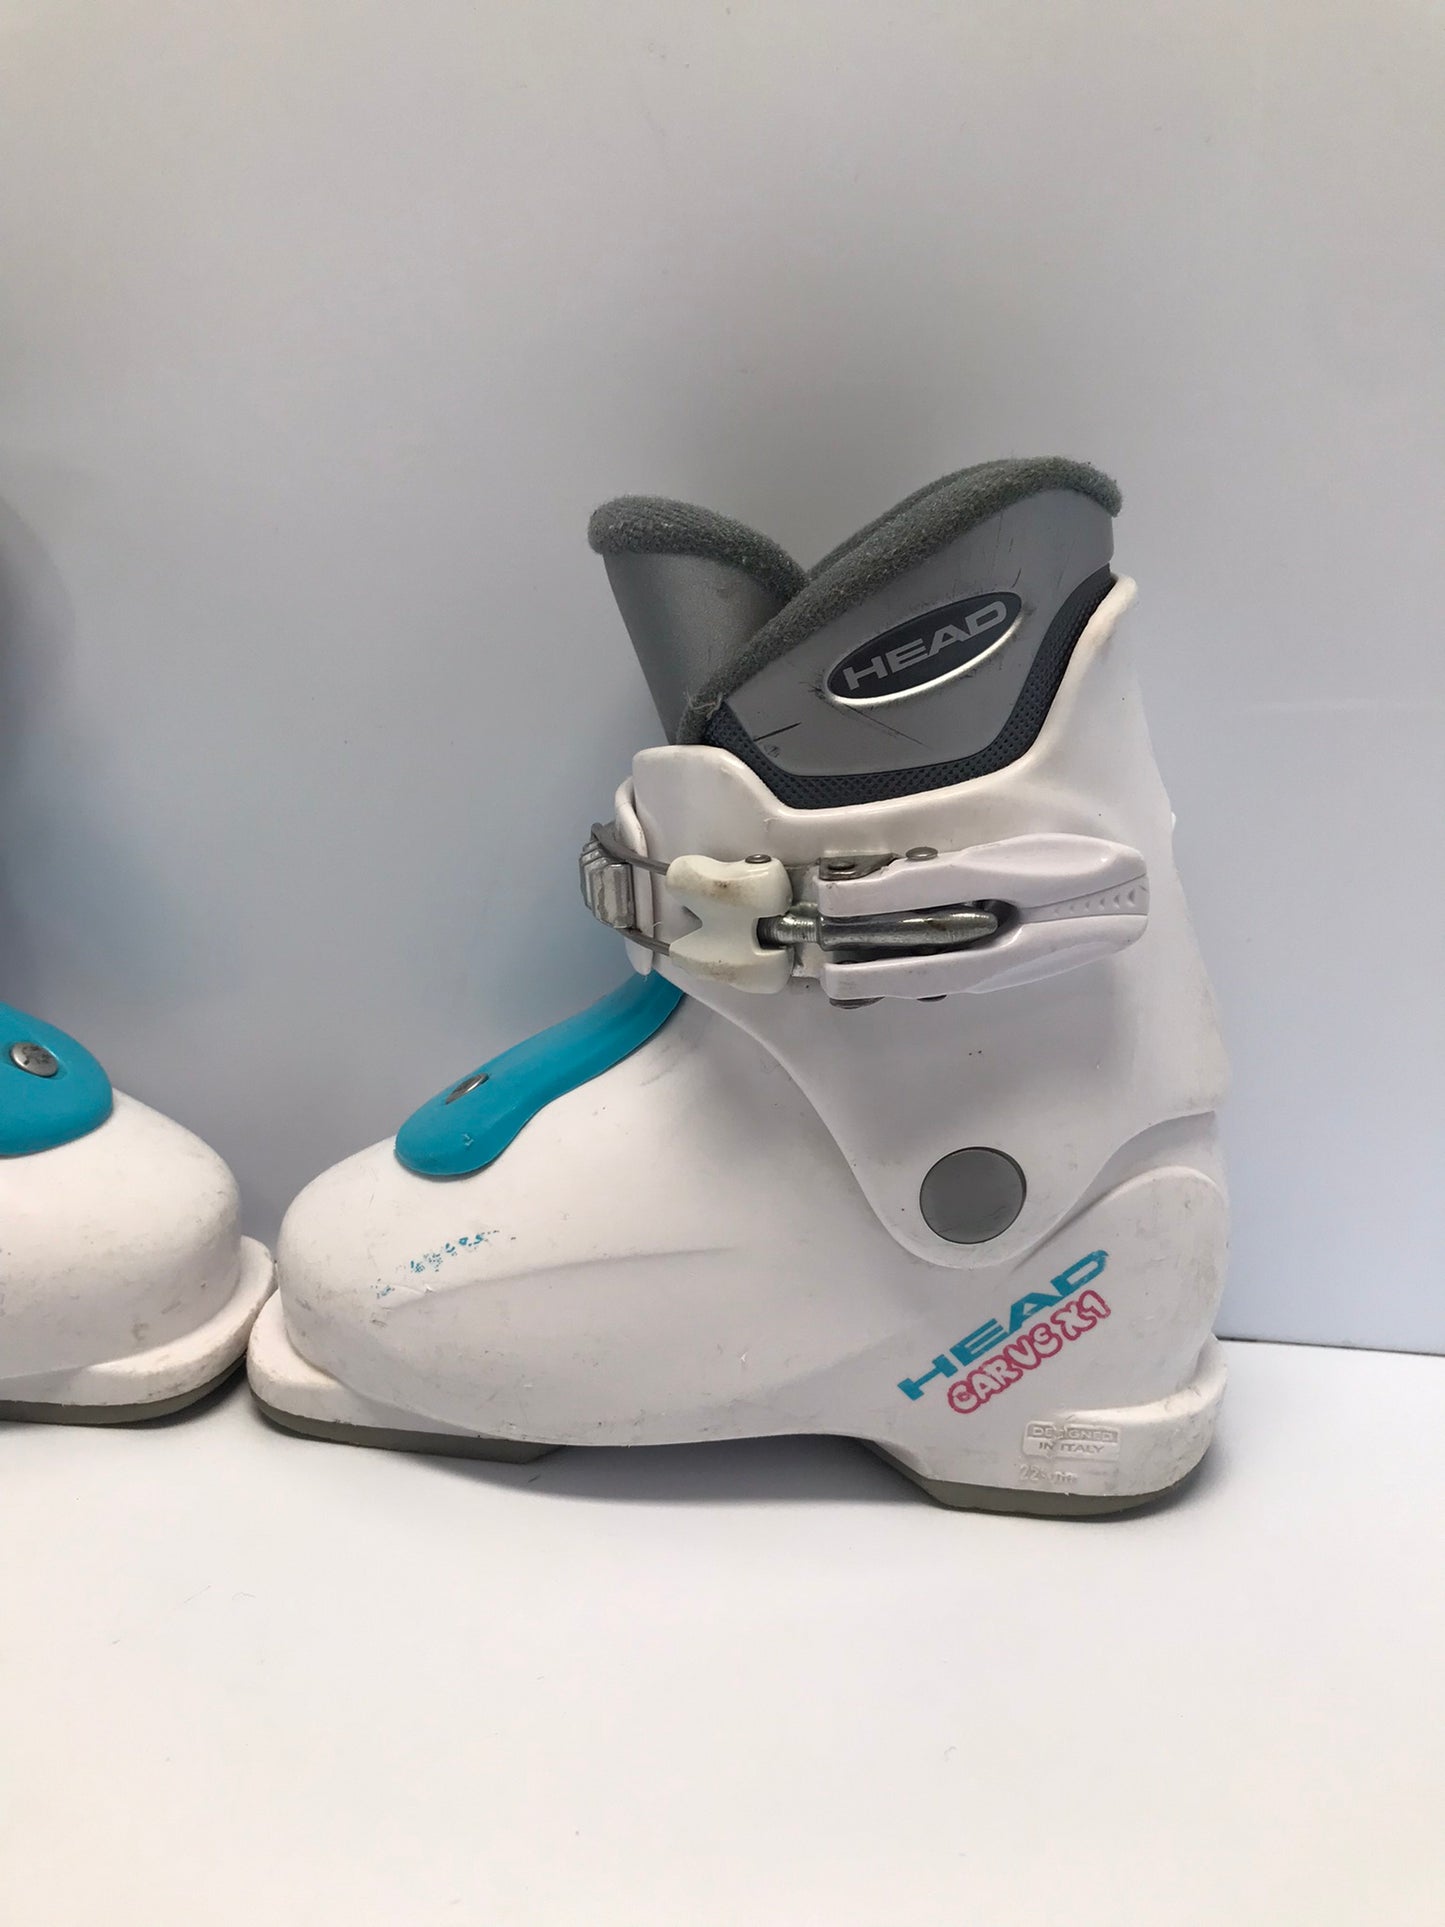 Ski Boots Mondo Size 18.0 Child Size 12 221mm Head Curve White Blue Some Wear Scratches